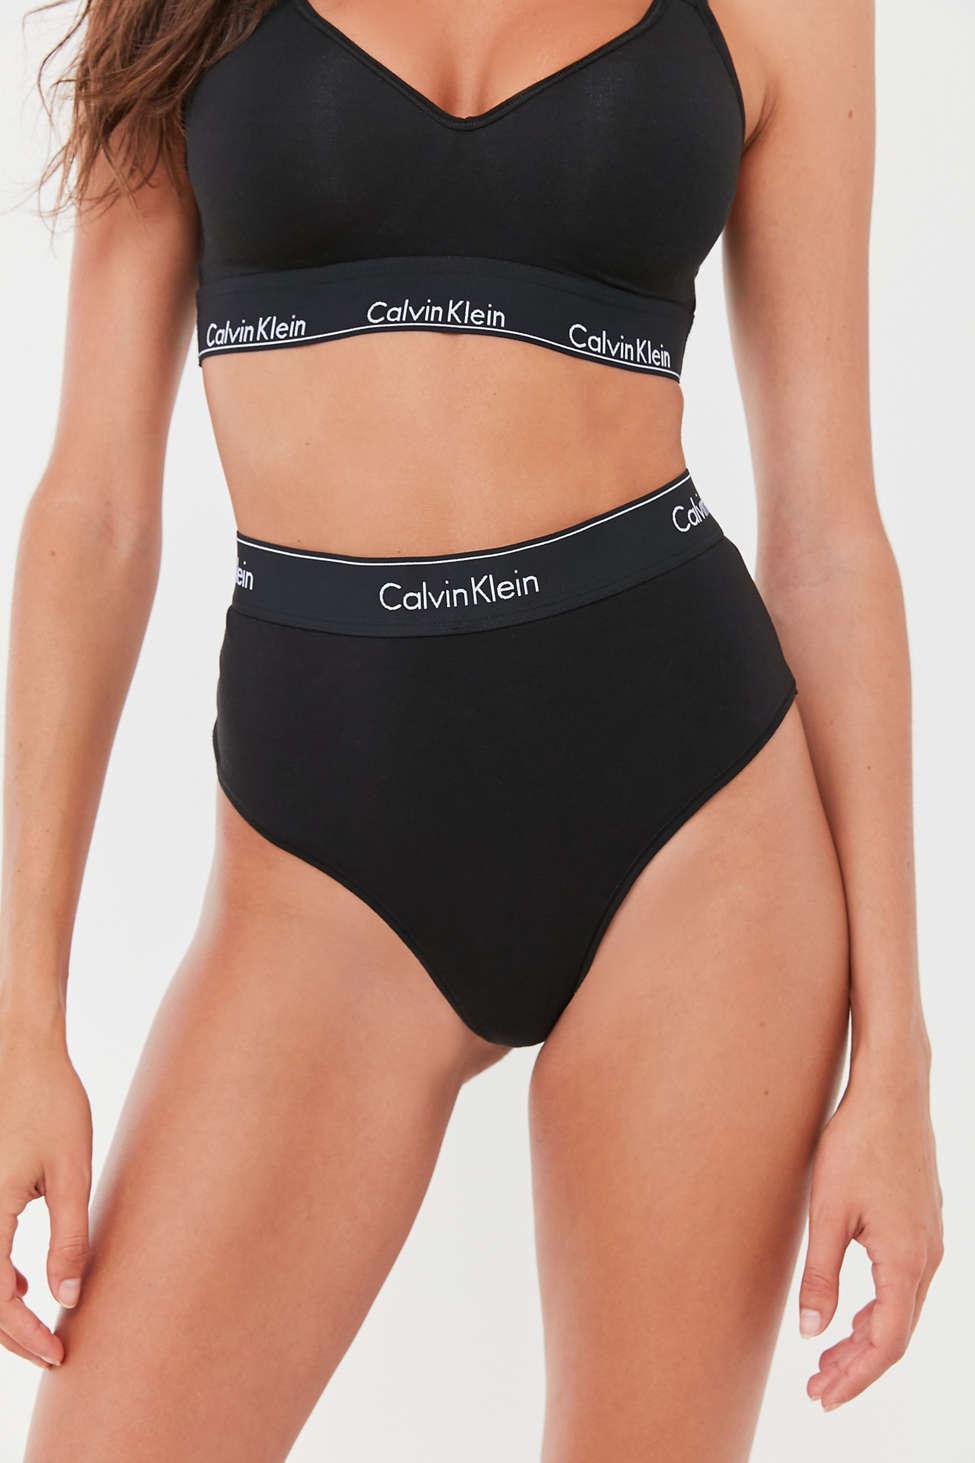 Teleurstelling Rand Ouderling Calvin Klein Calvin Klein Modern Cotton High-waisted Thong in Black - Lyst